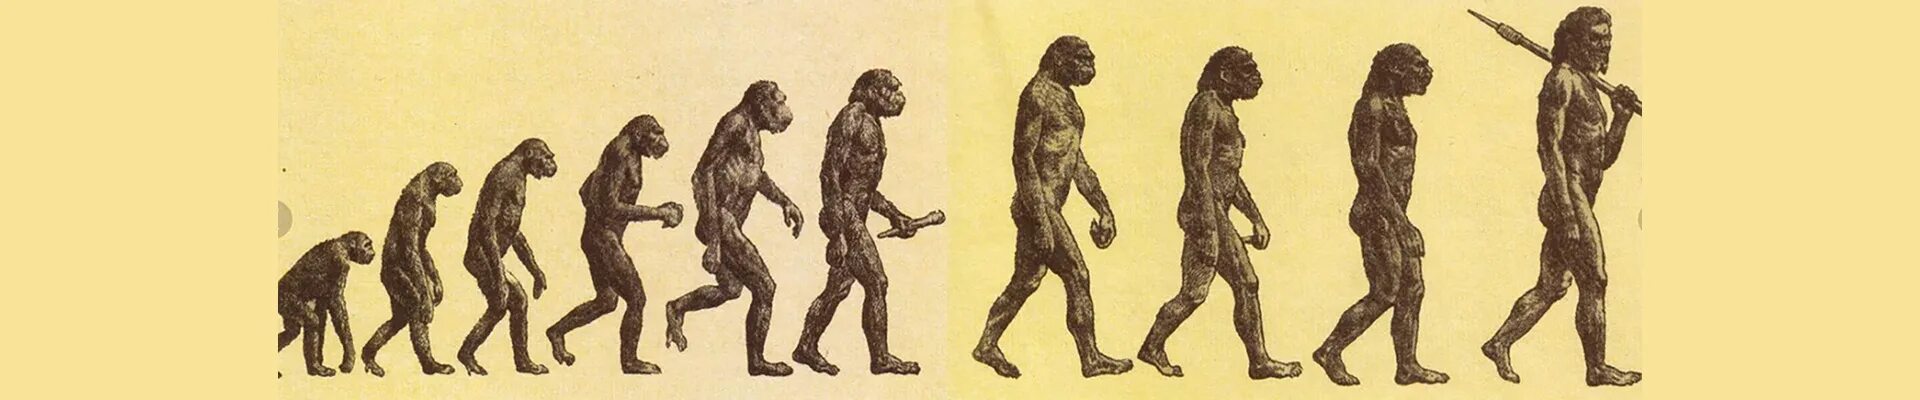 Теория эволюции Дарвина. Дарвин теория эволюции и происхождения человека. Теория Дарвина о происхождении человека. Процесс превращения человека в обезьяну